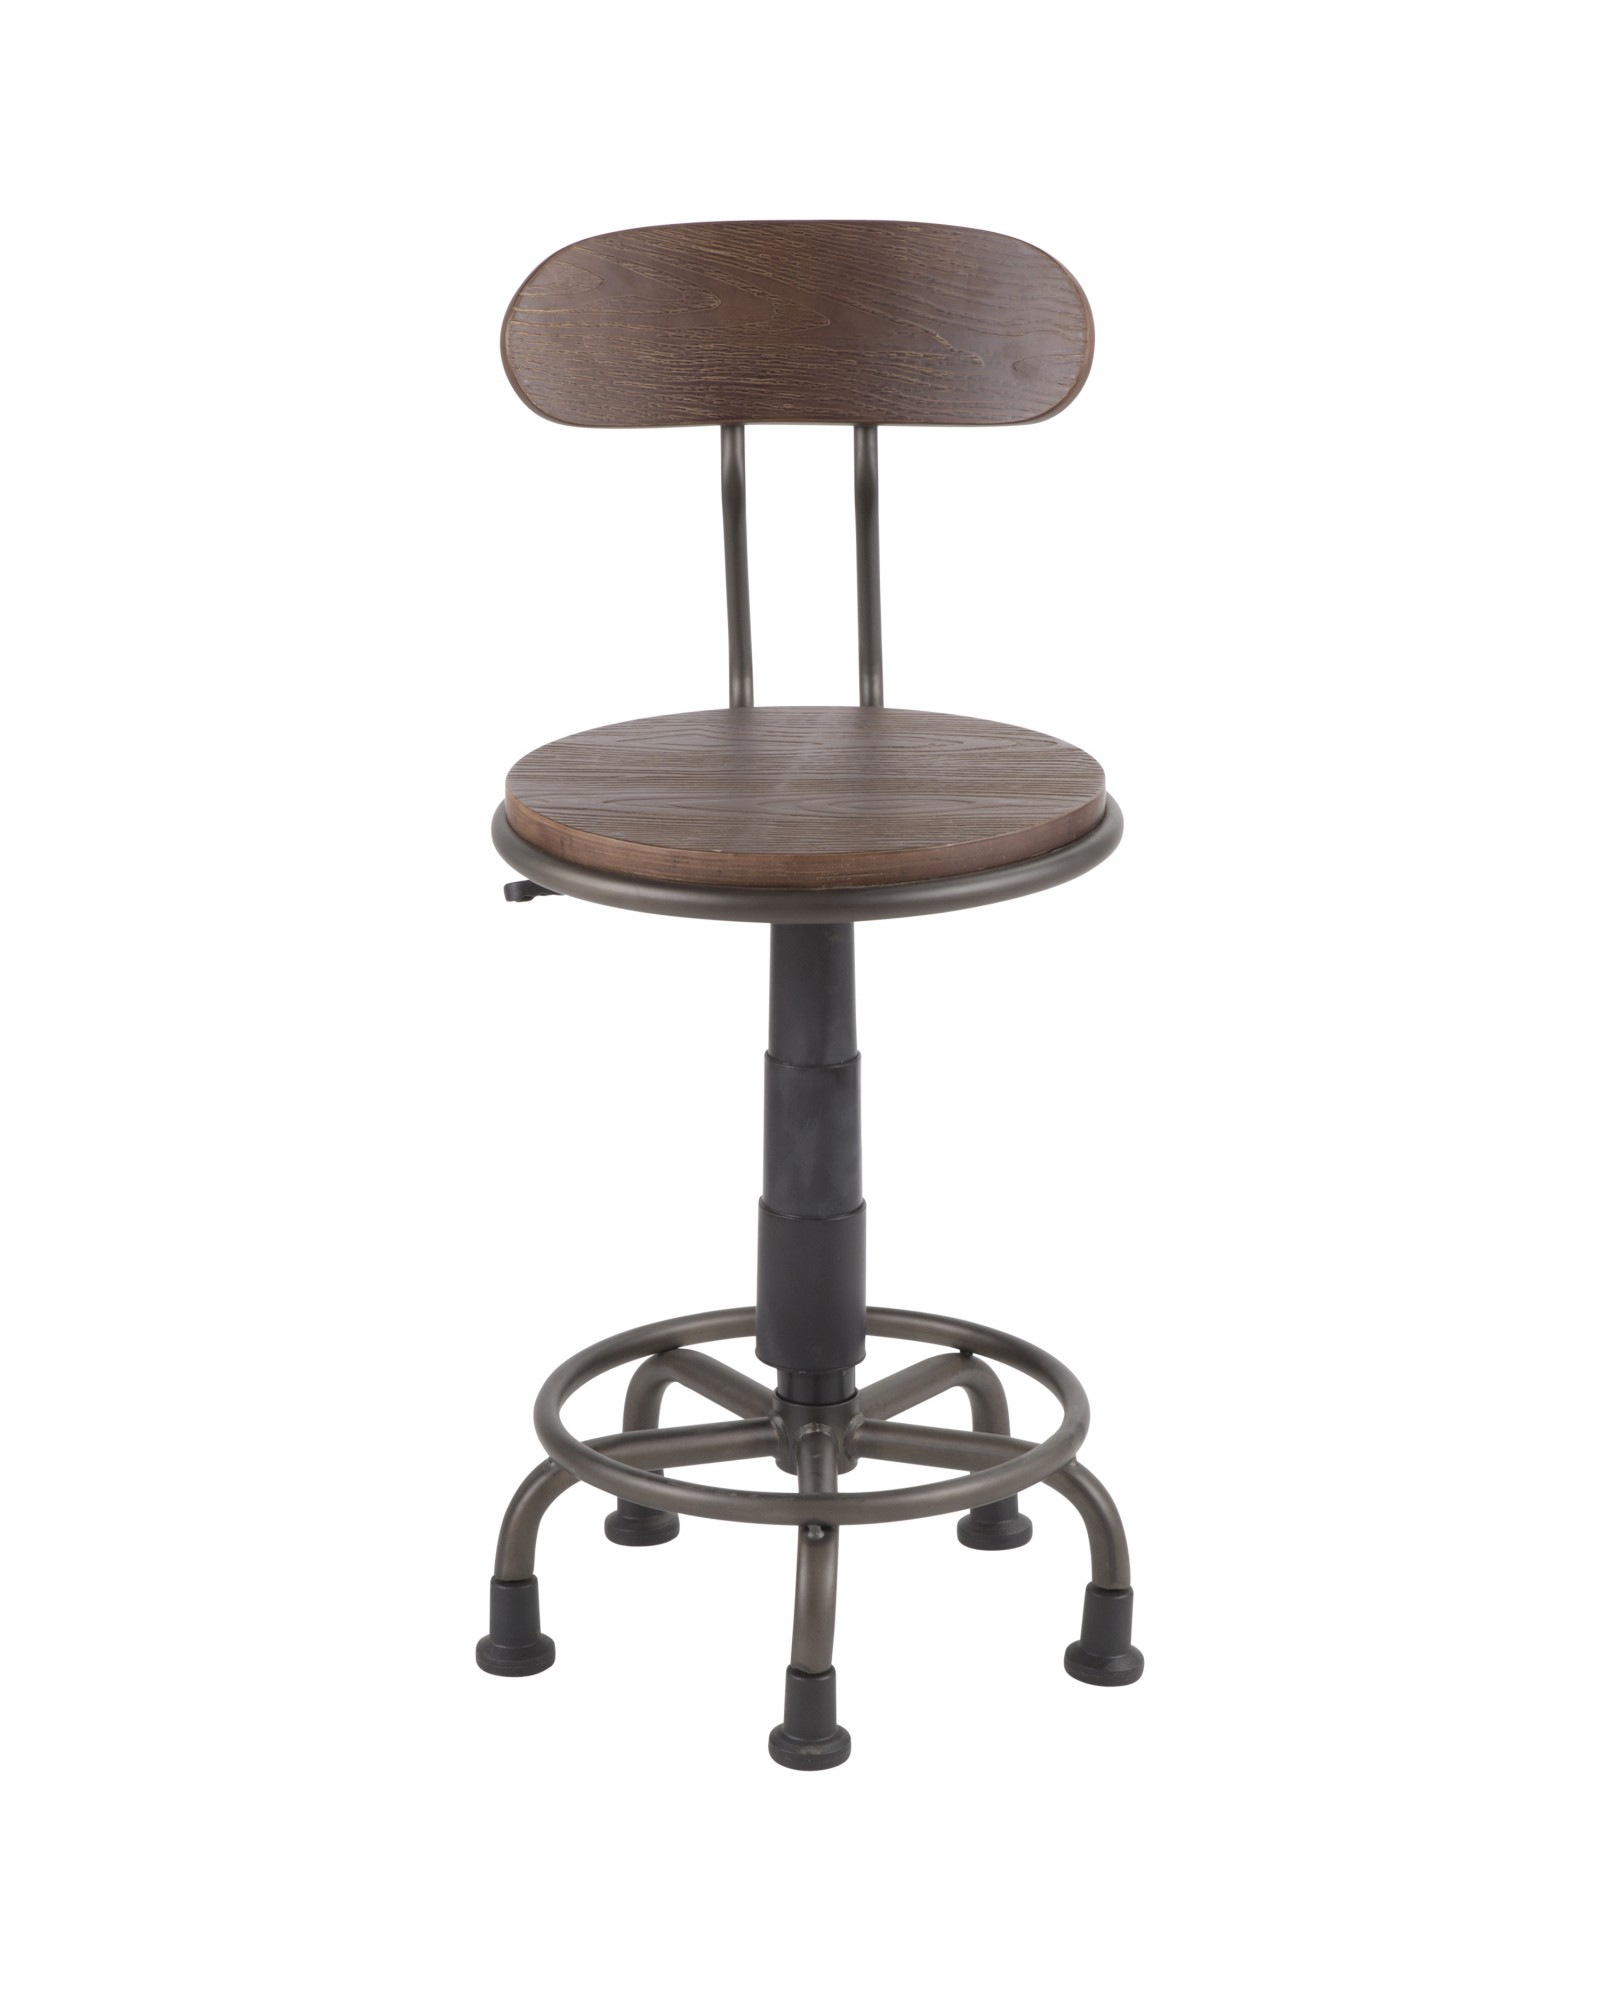 Dakota Industrial Task Chair in Antique Metal and Espresso Wood